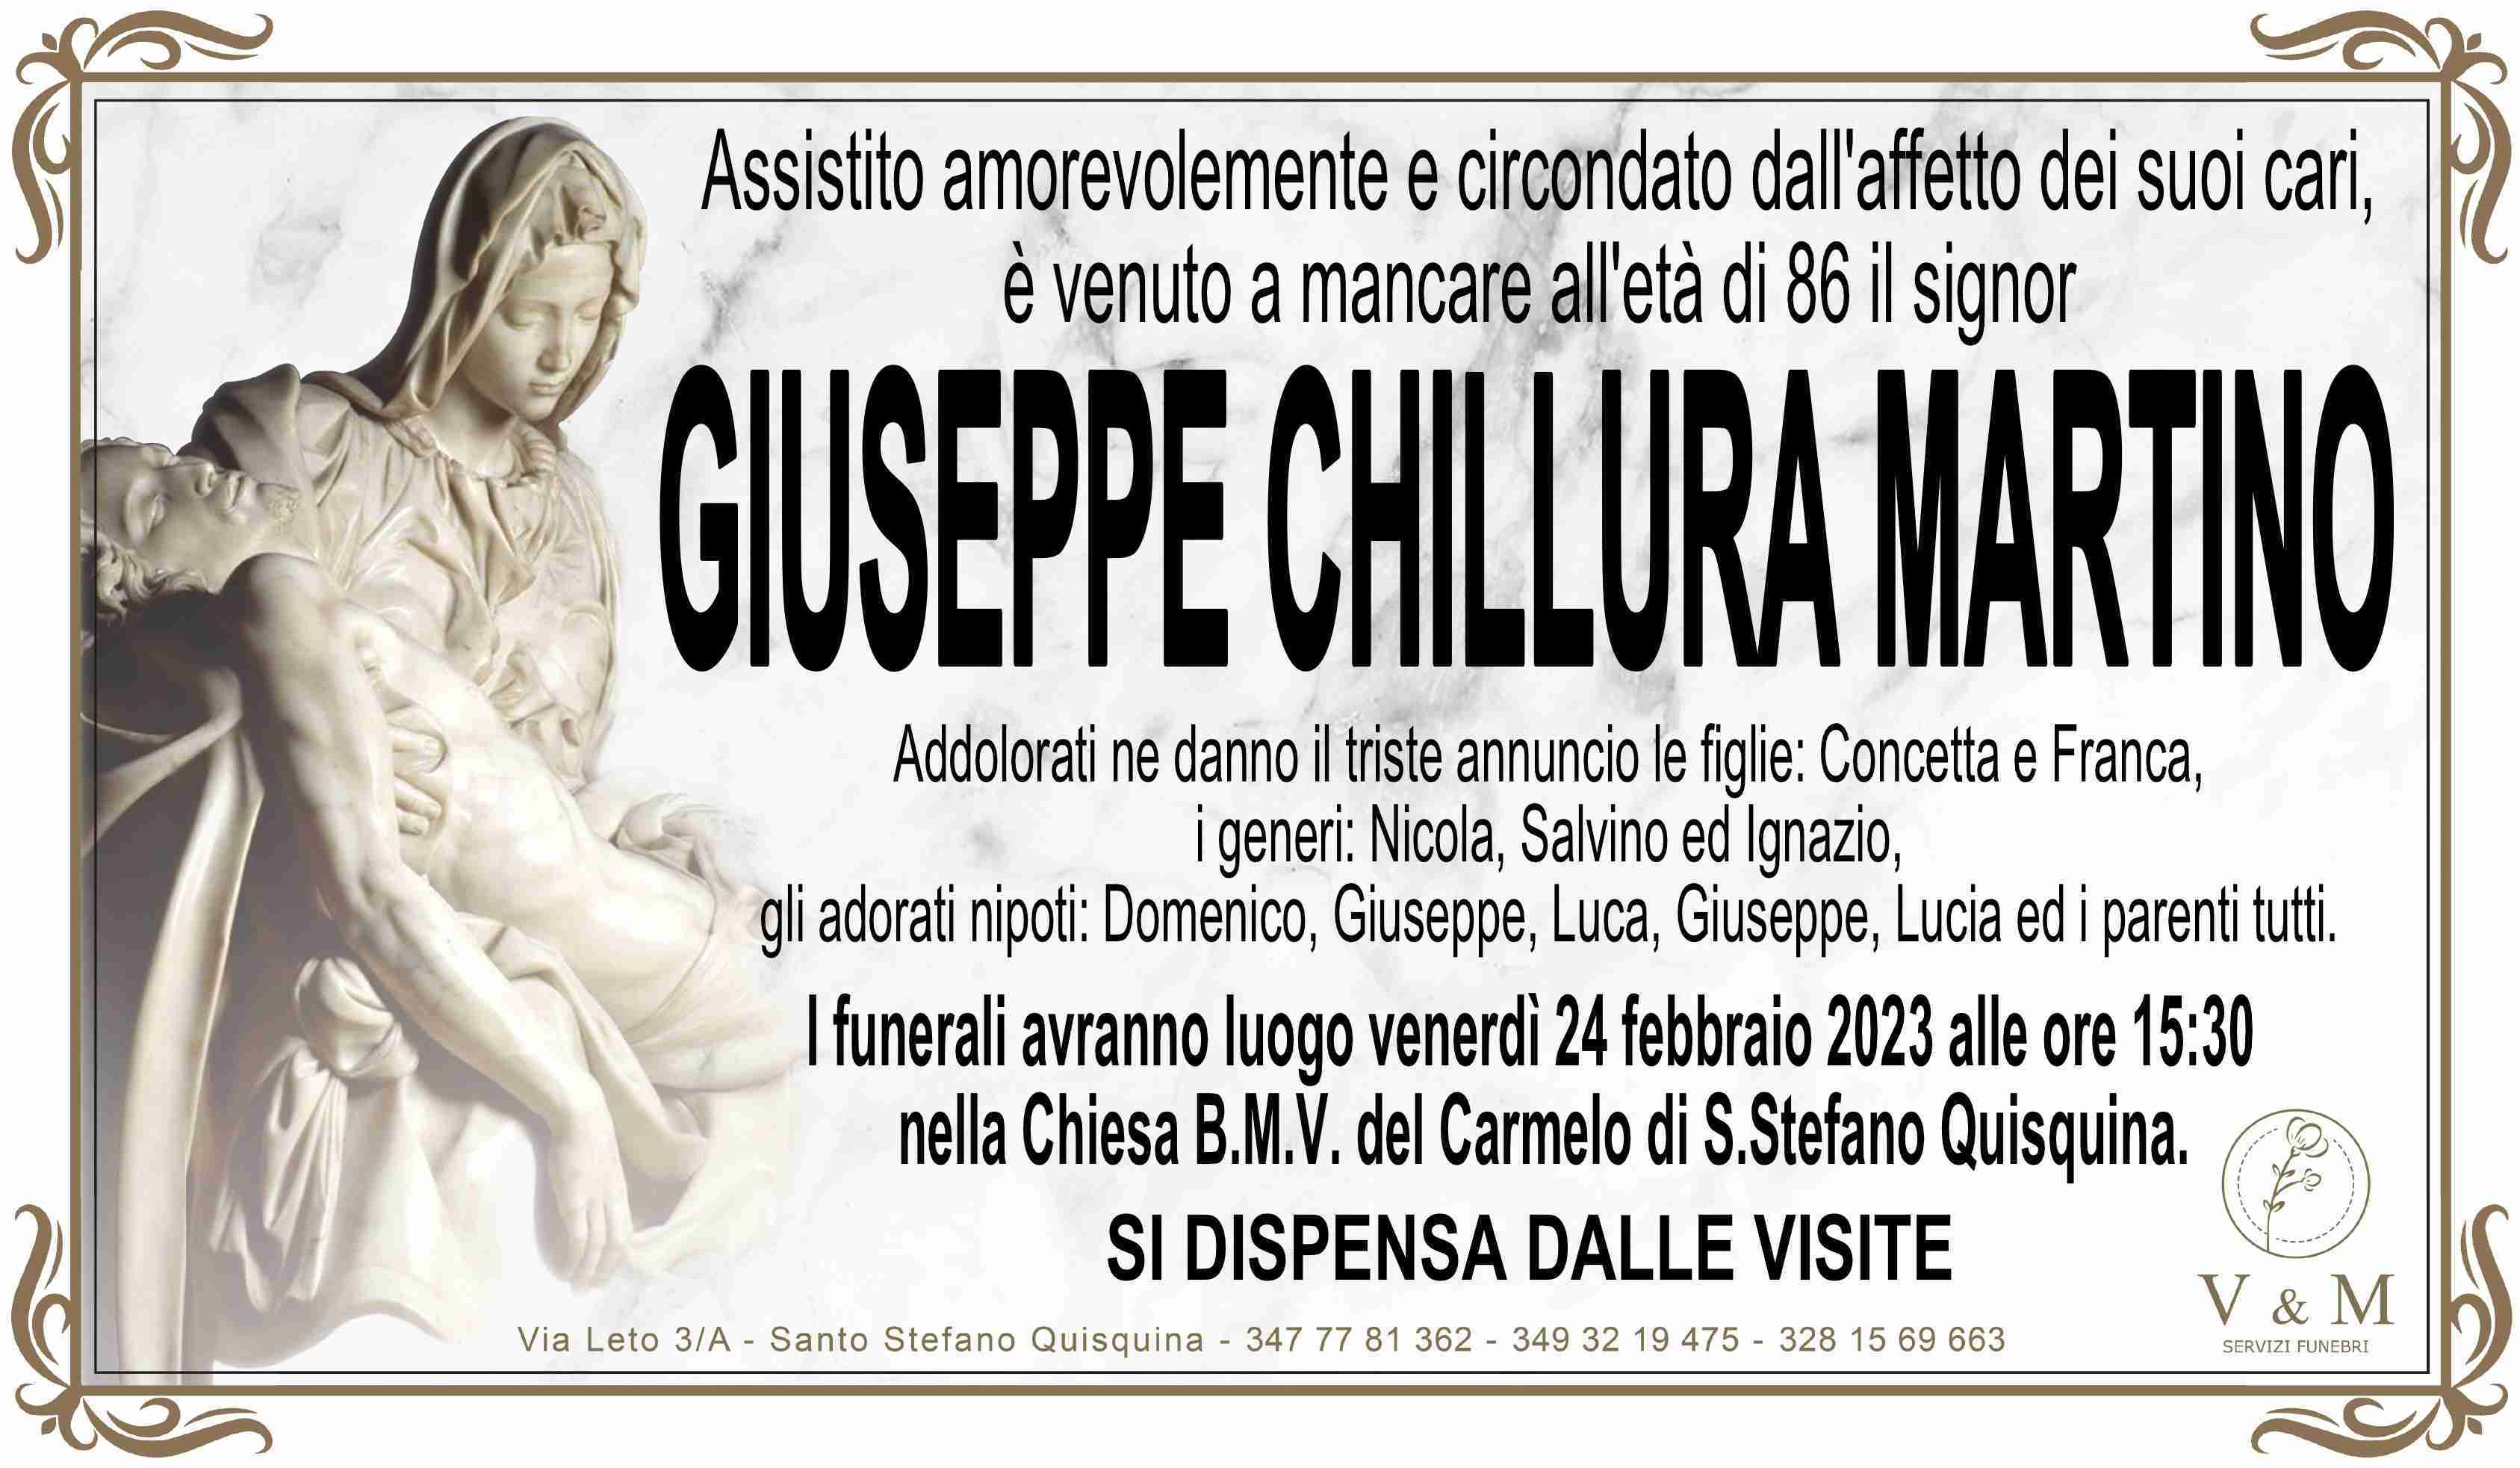 Giuseppe Chillura Martino